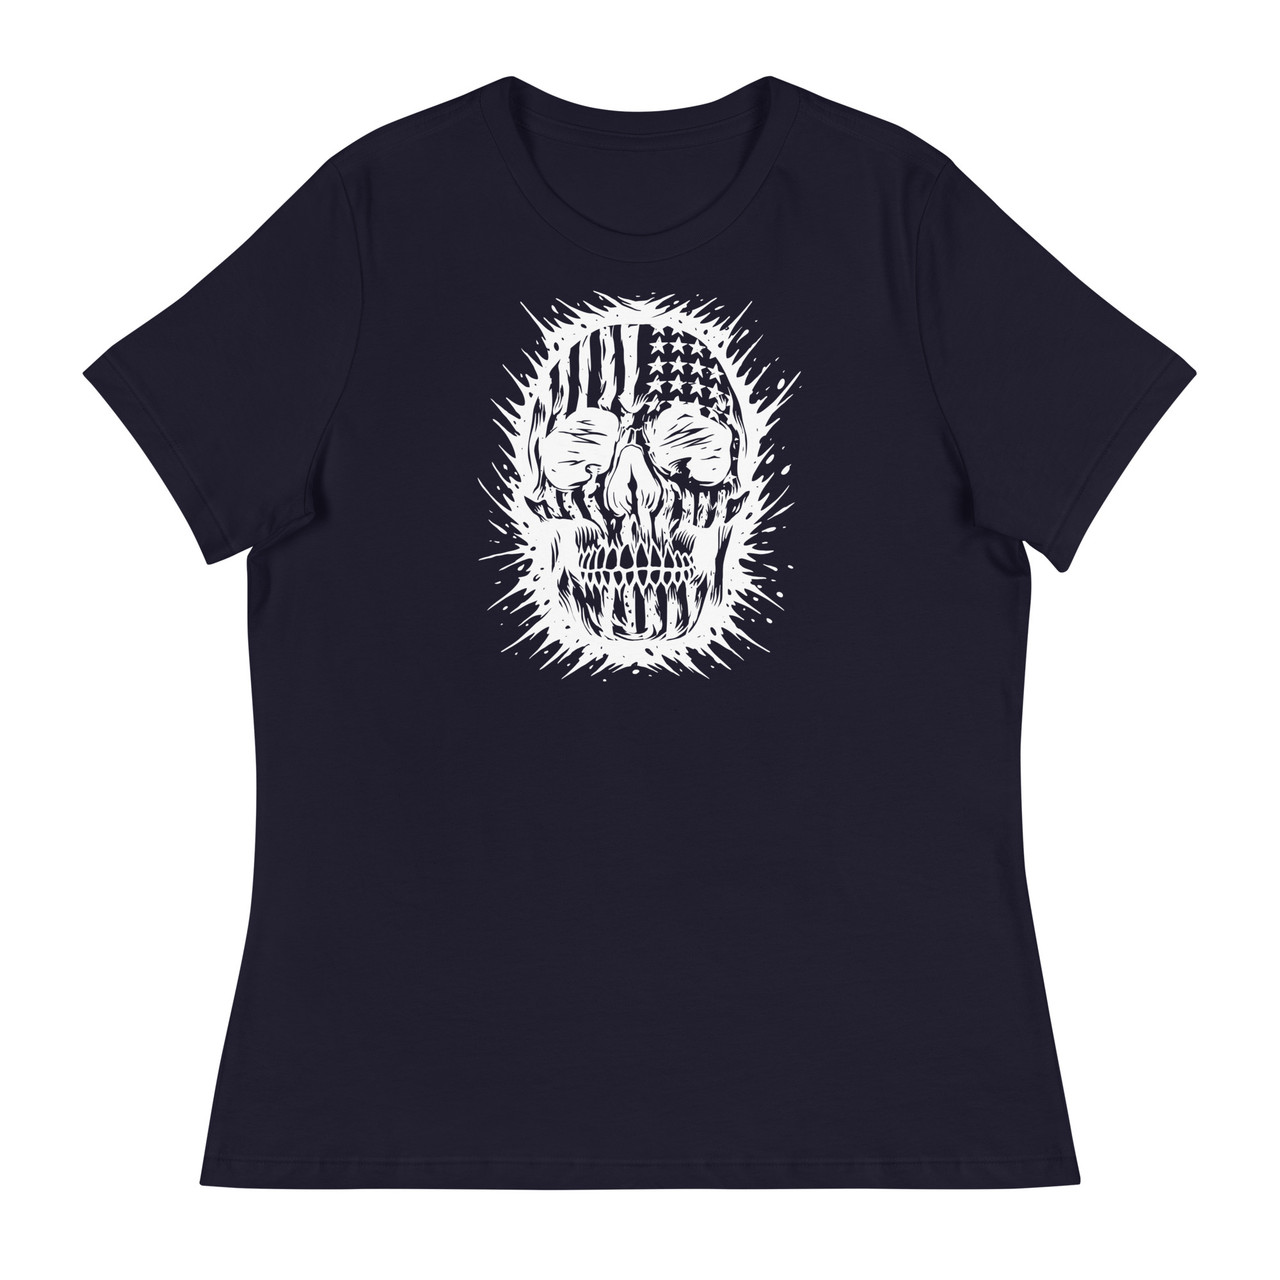 American Skull Black & White Women's Relaxed T-Shirt - Bella + Canvas 6400 